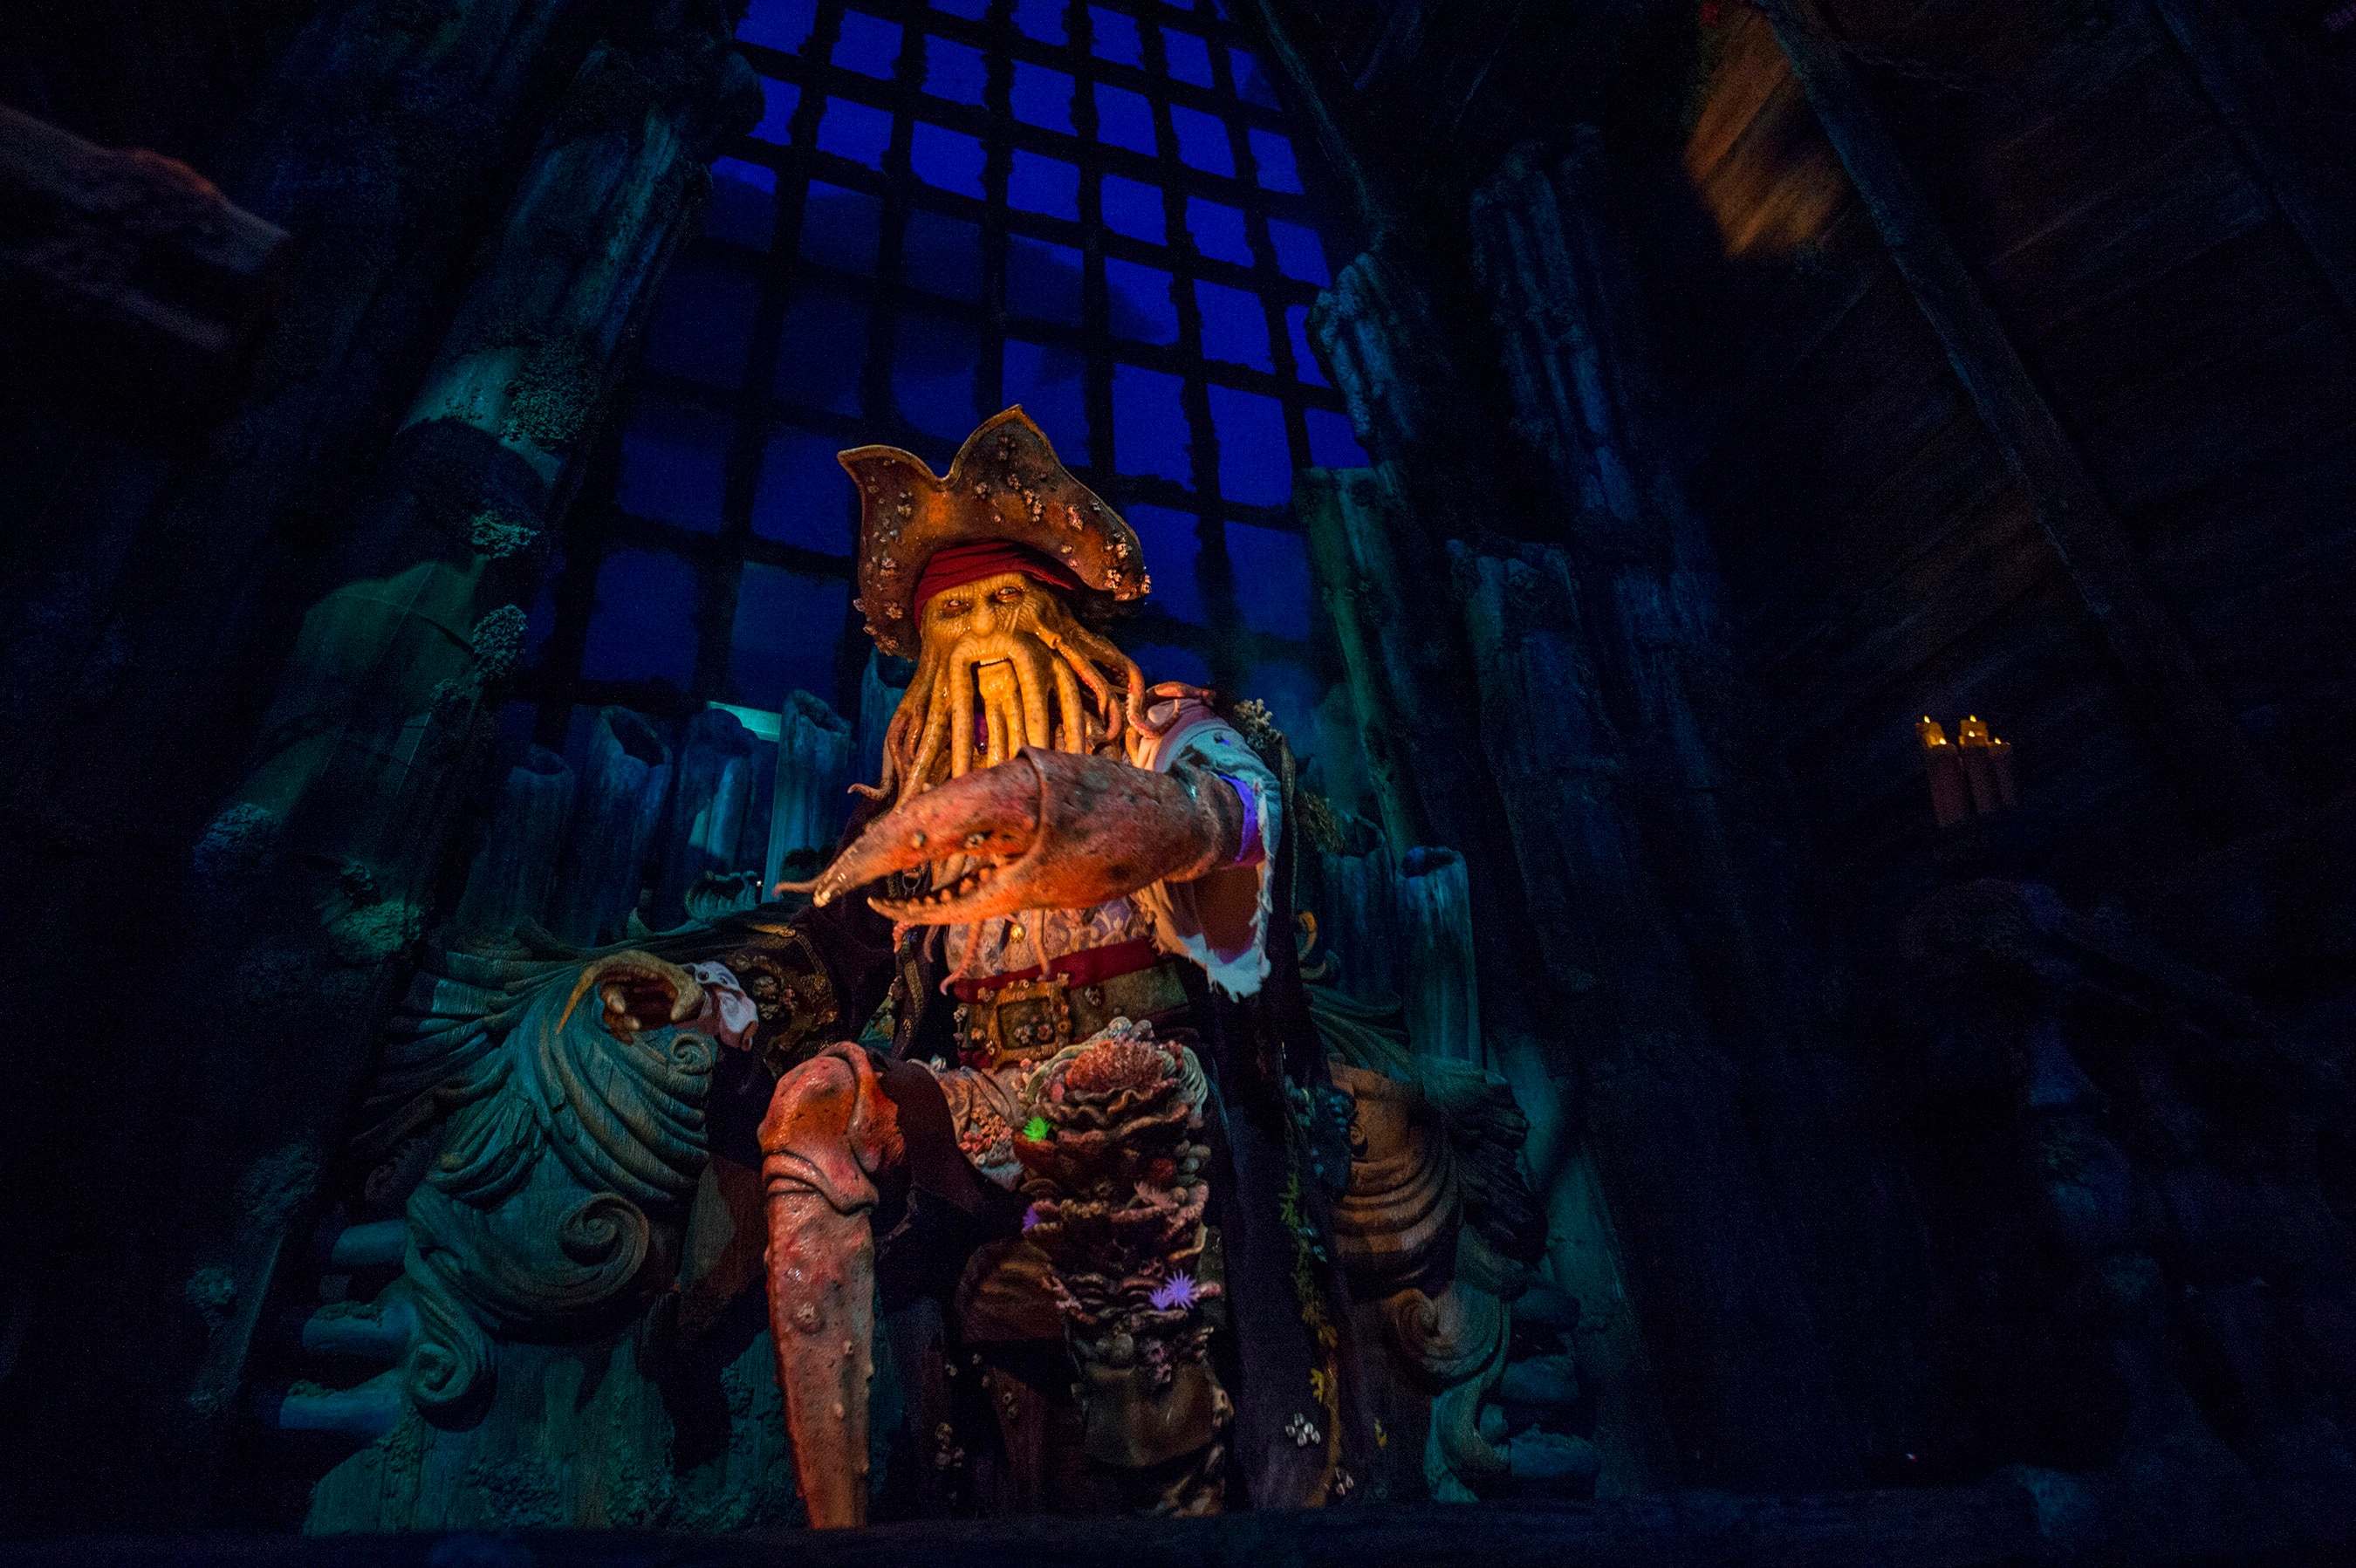 Pirates of the Caribbean: Battle for the Sunken Treasure at Shanghai Disneyland